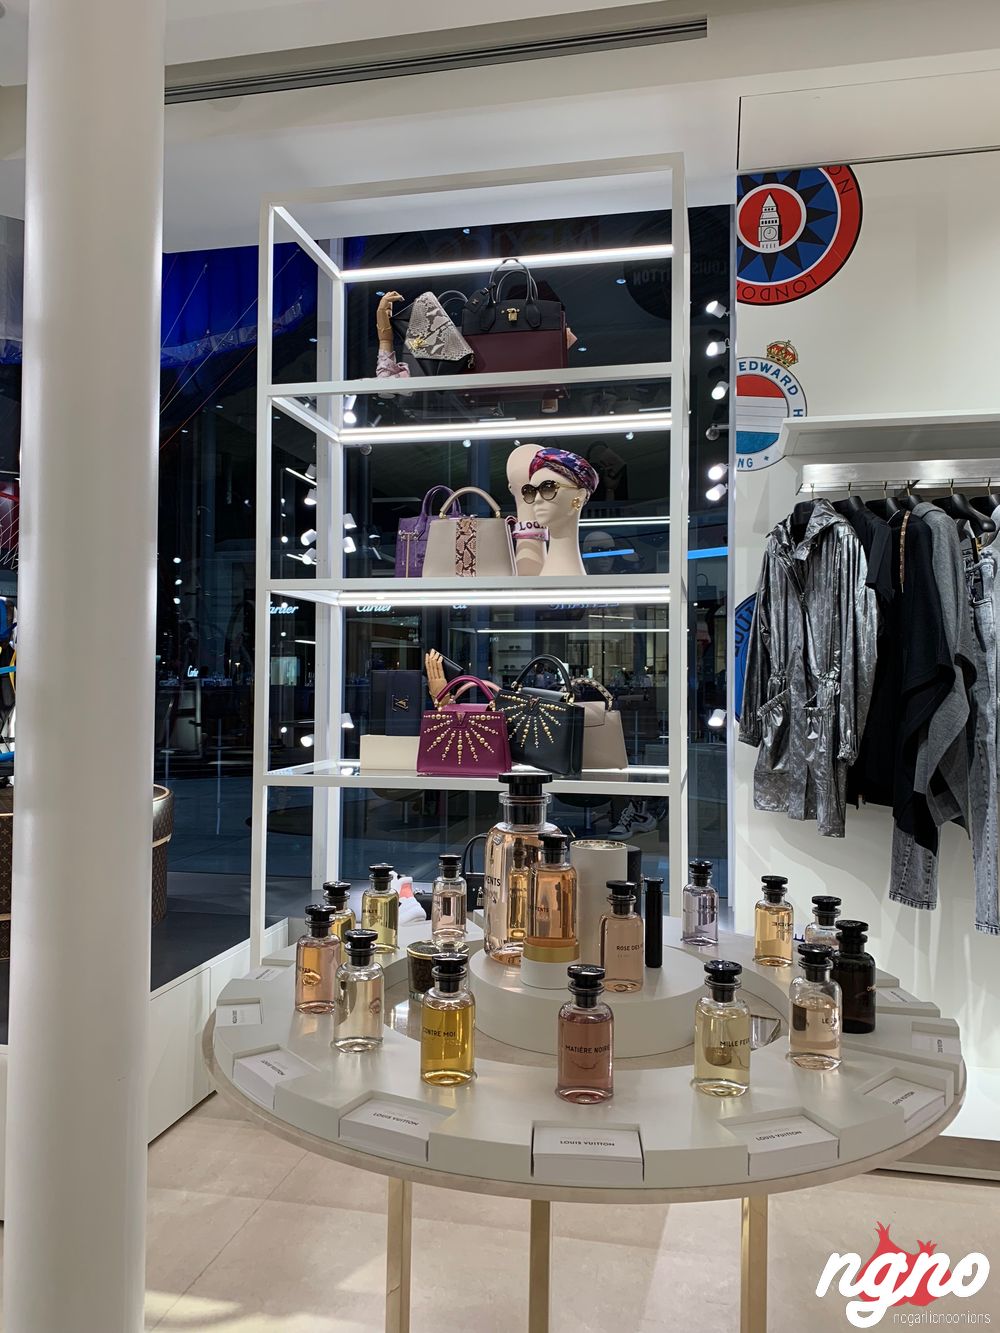 Chanel opens a second boutique at Paris-Charles de Gaulle airport